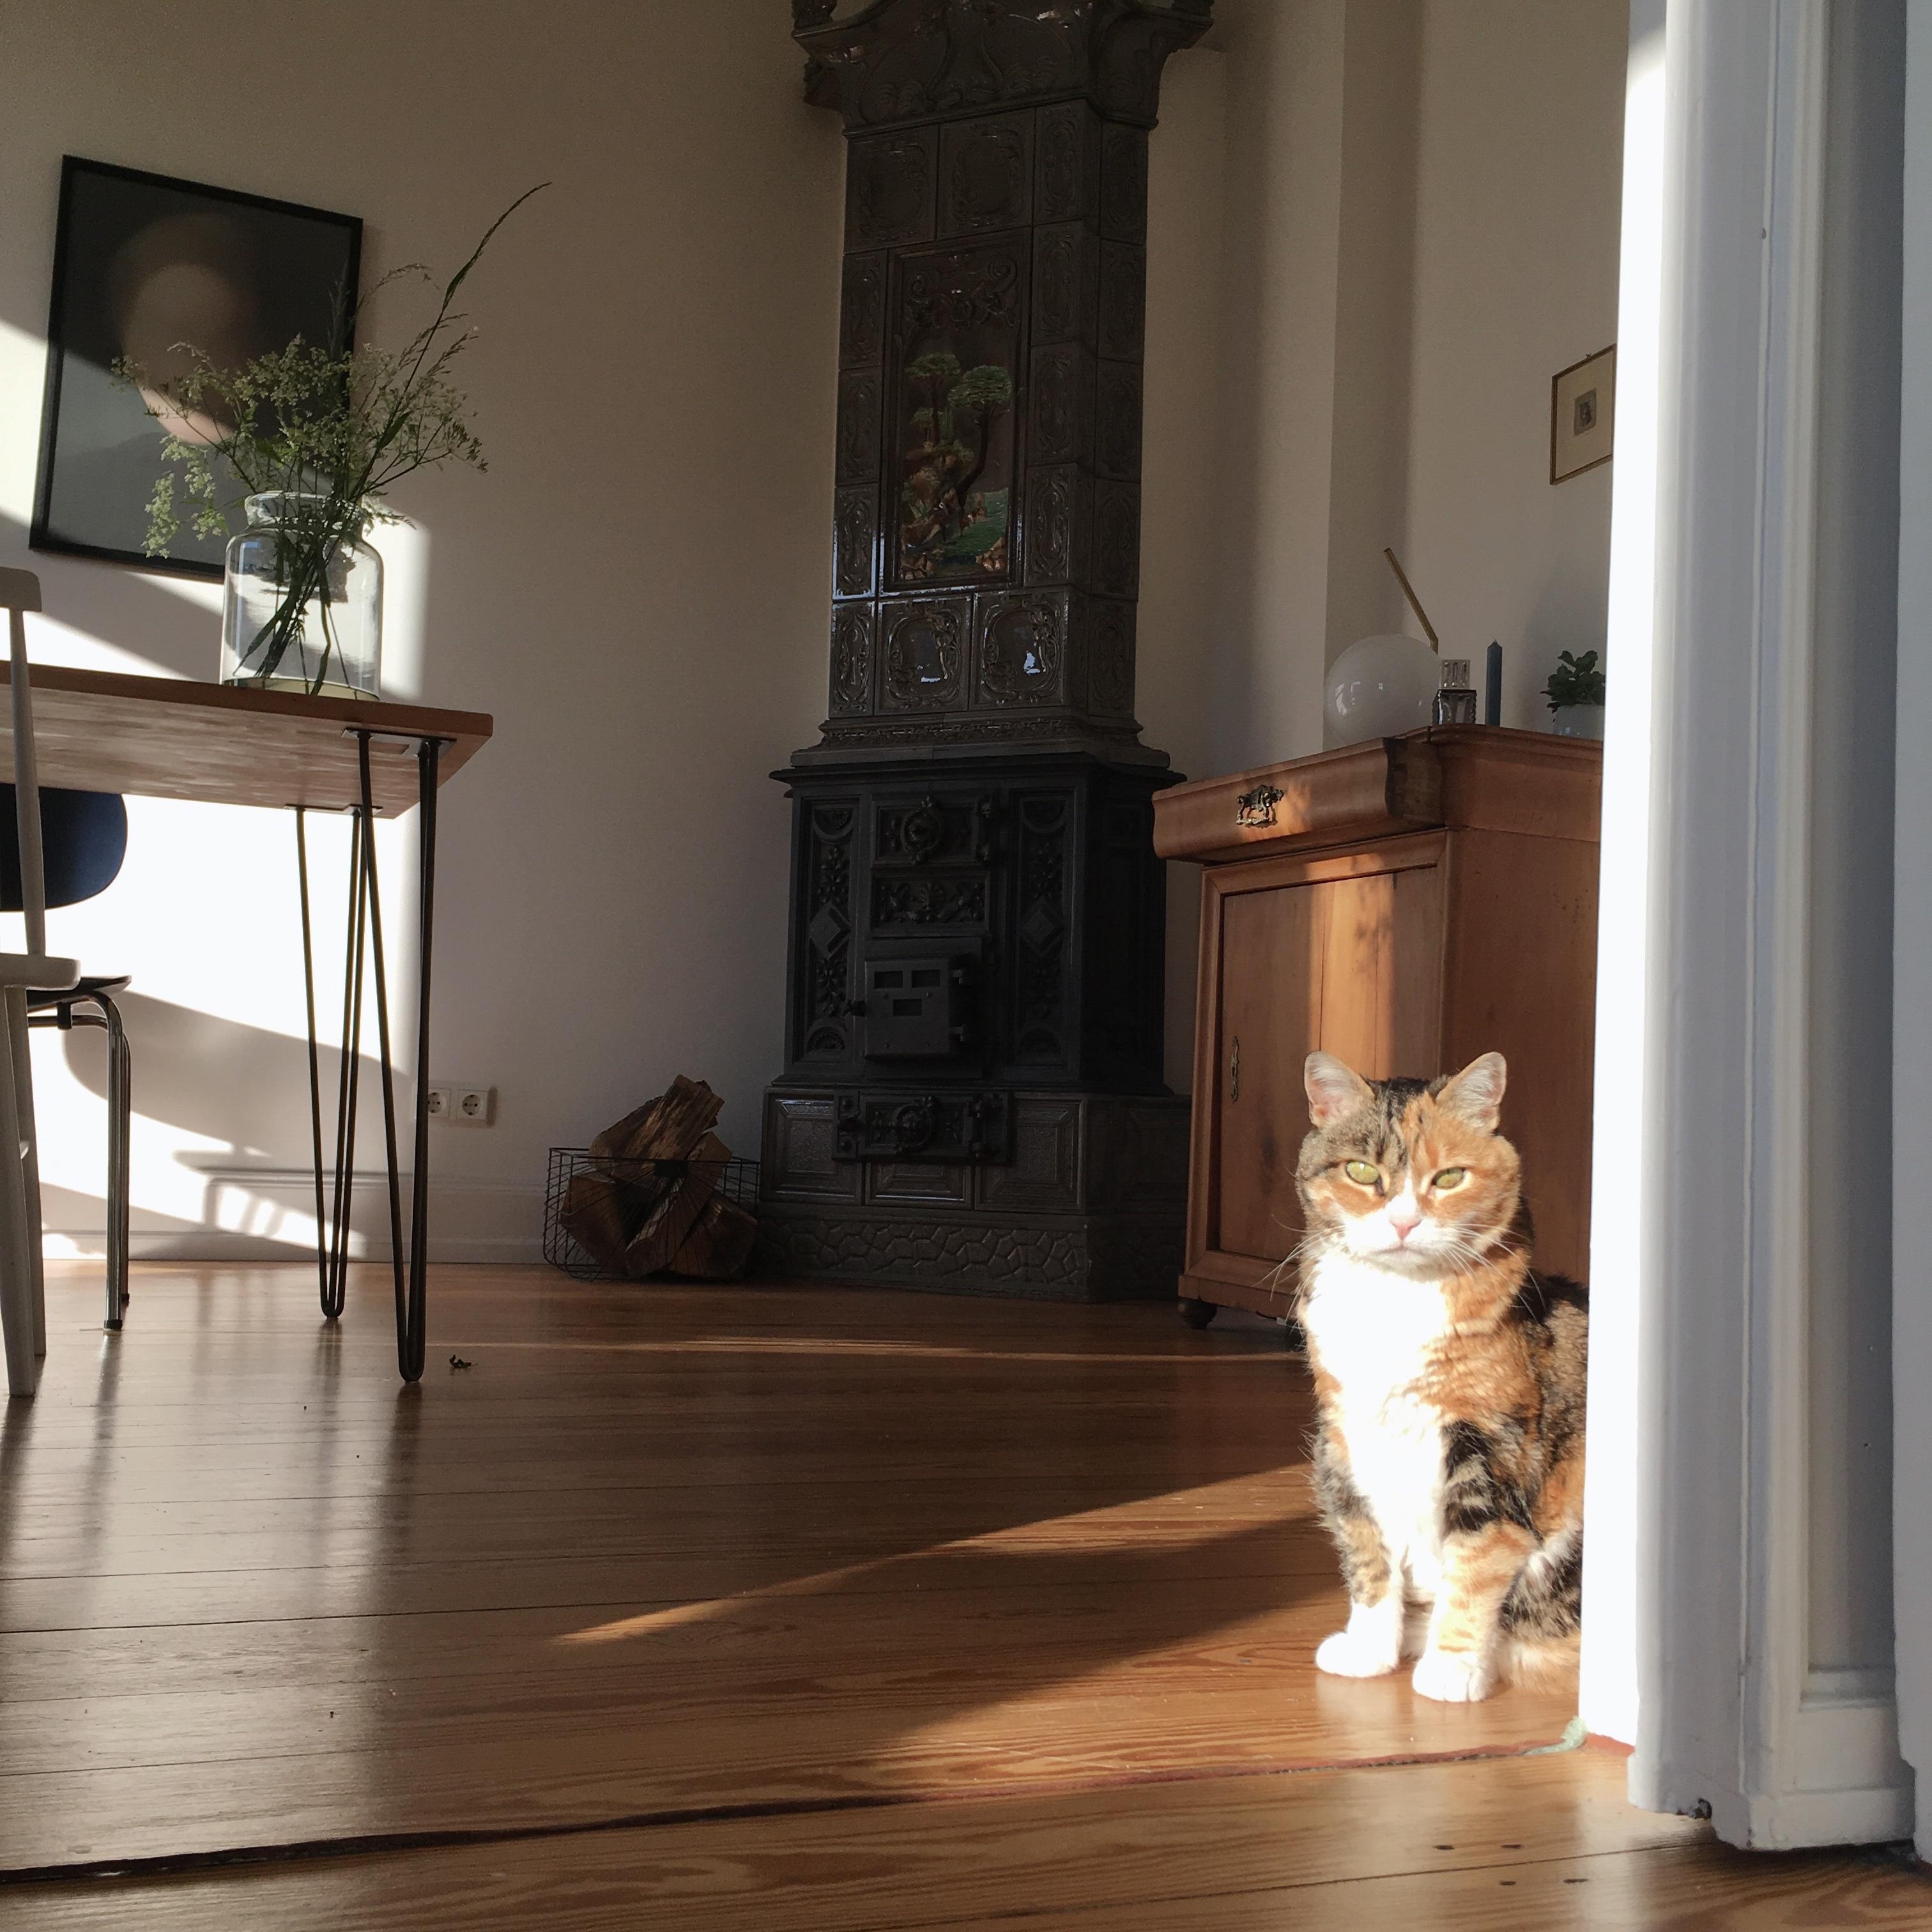 time to shine #cat #sun #summerfeeling #altbau #sunlight #esszimmer #dielenboden #living #interior #lola